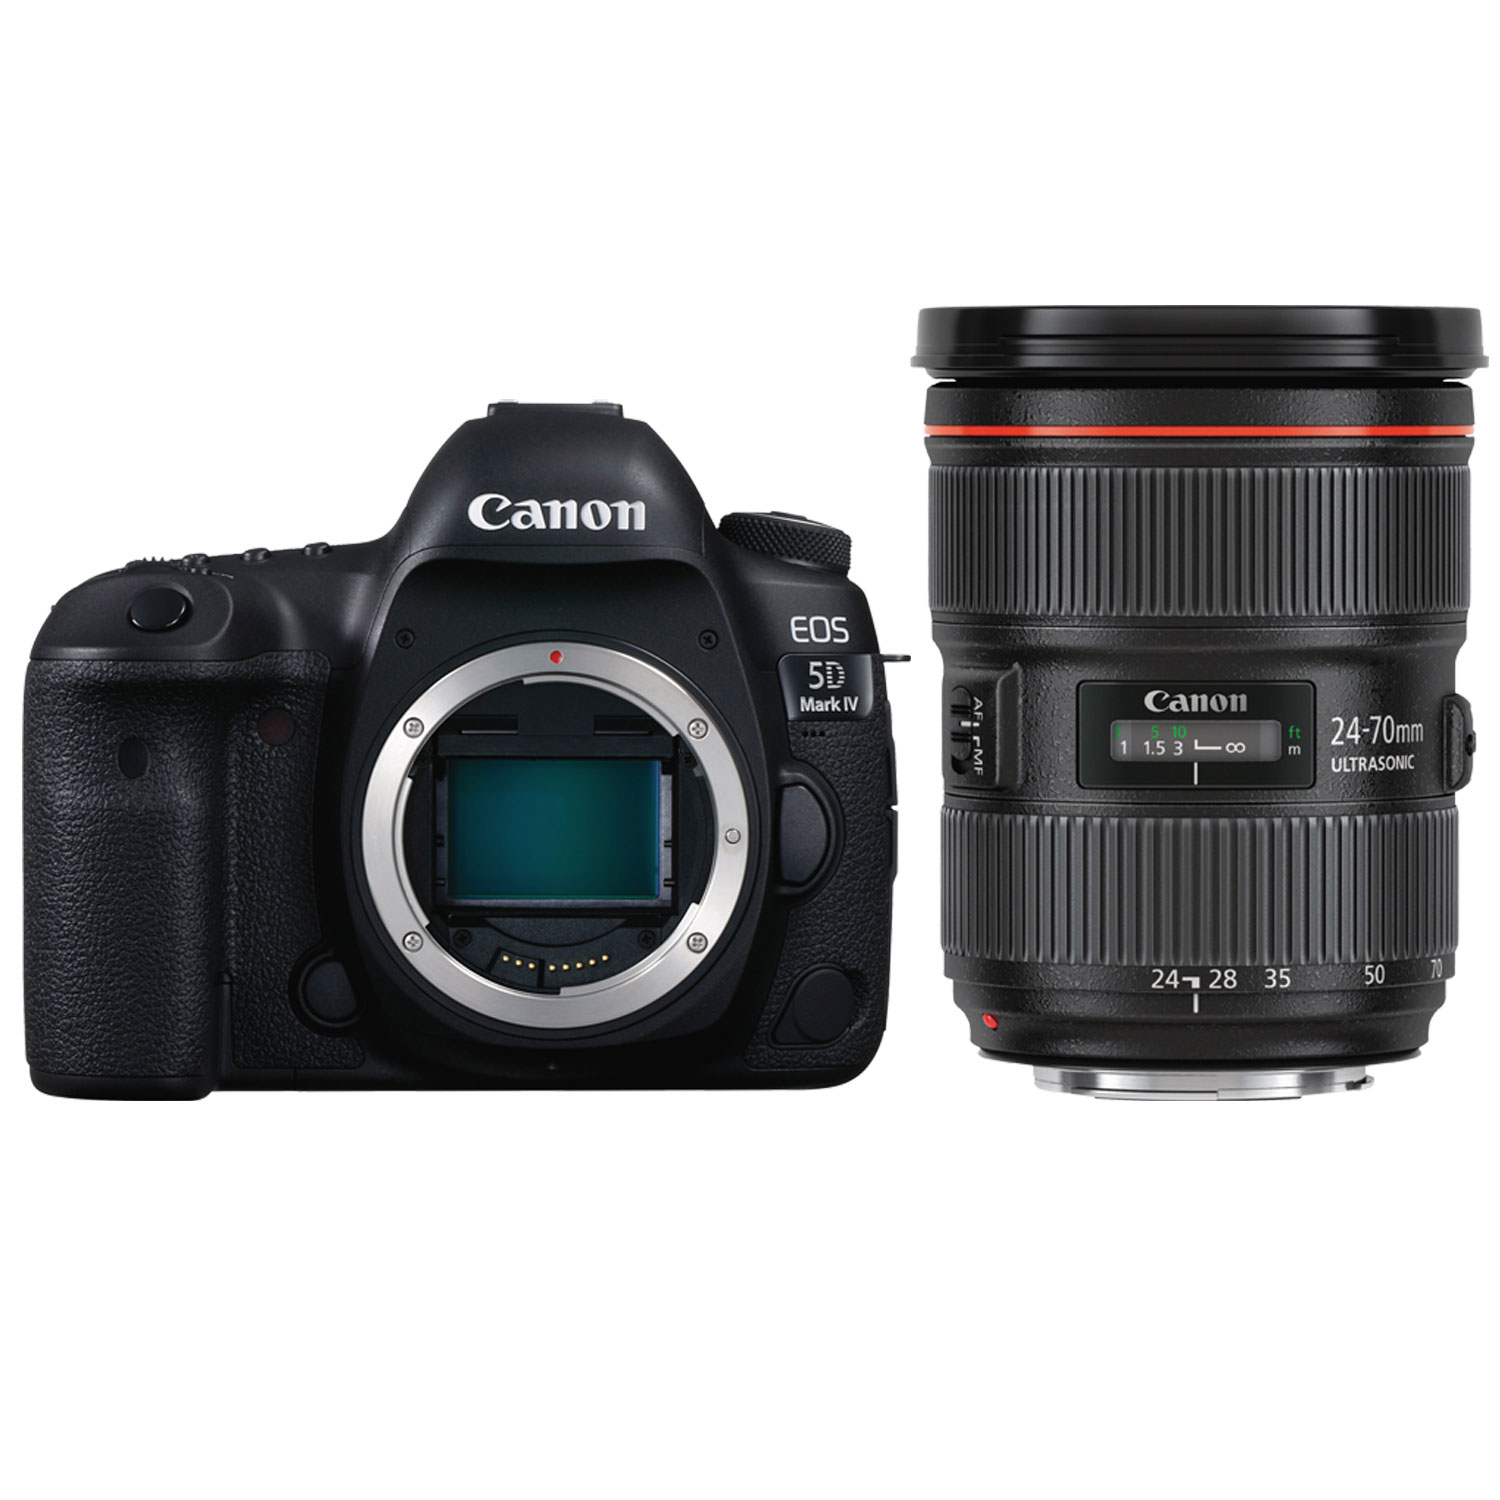 Canon EOS 5D Mark IV Full Frame DSLR Camera with EF 24-70mm II USM Lens